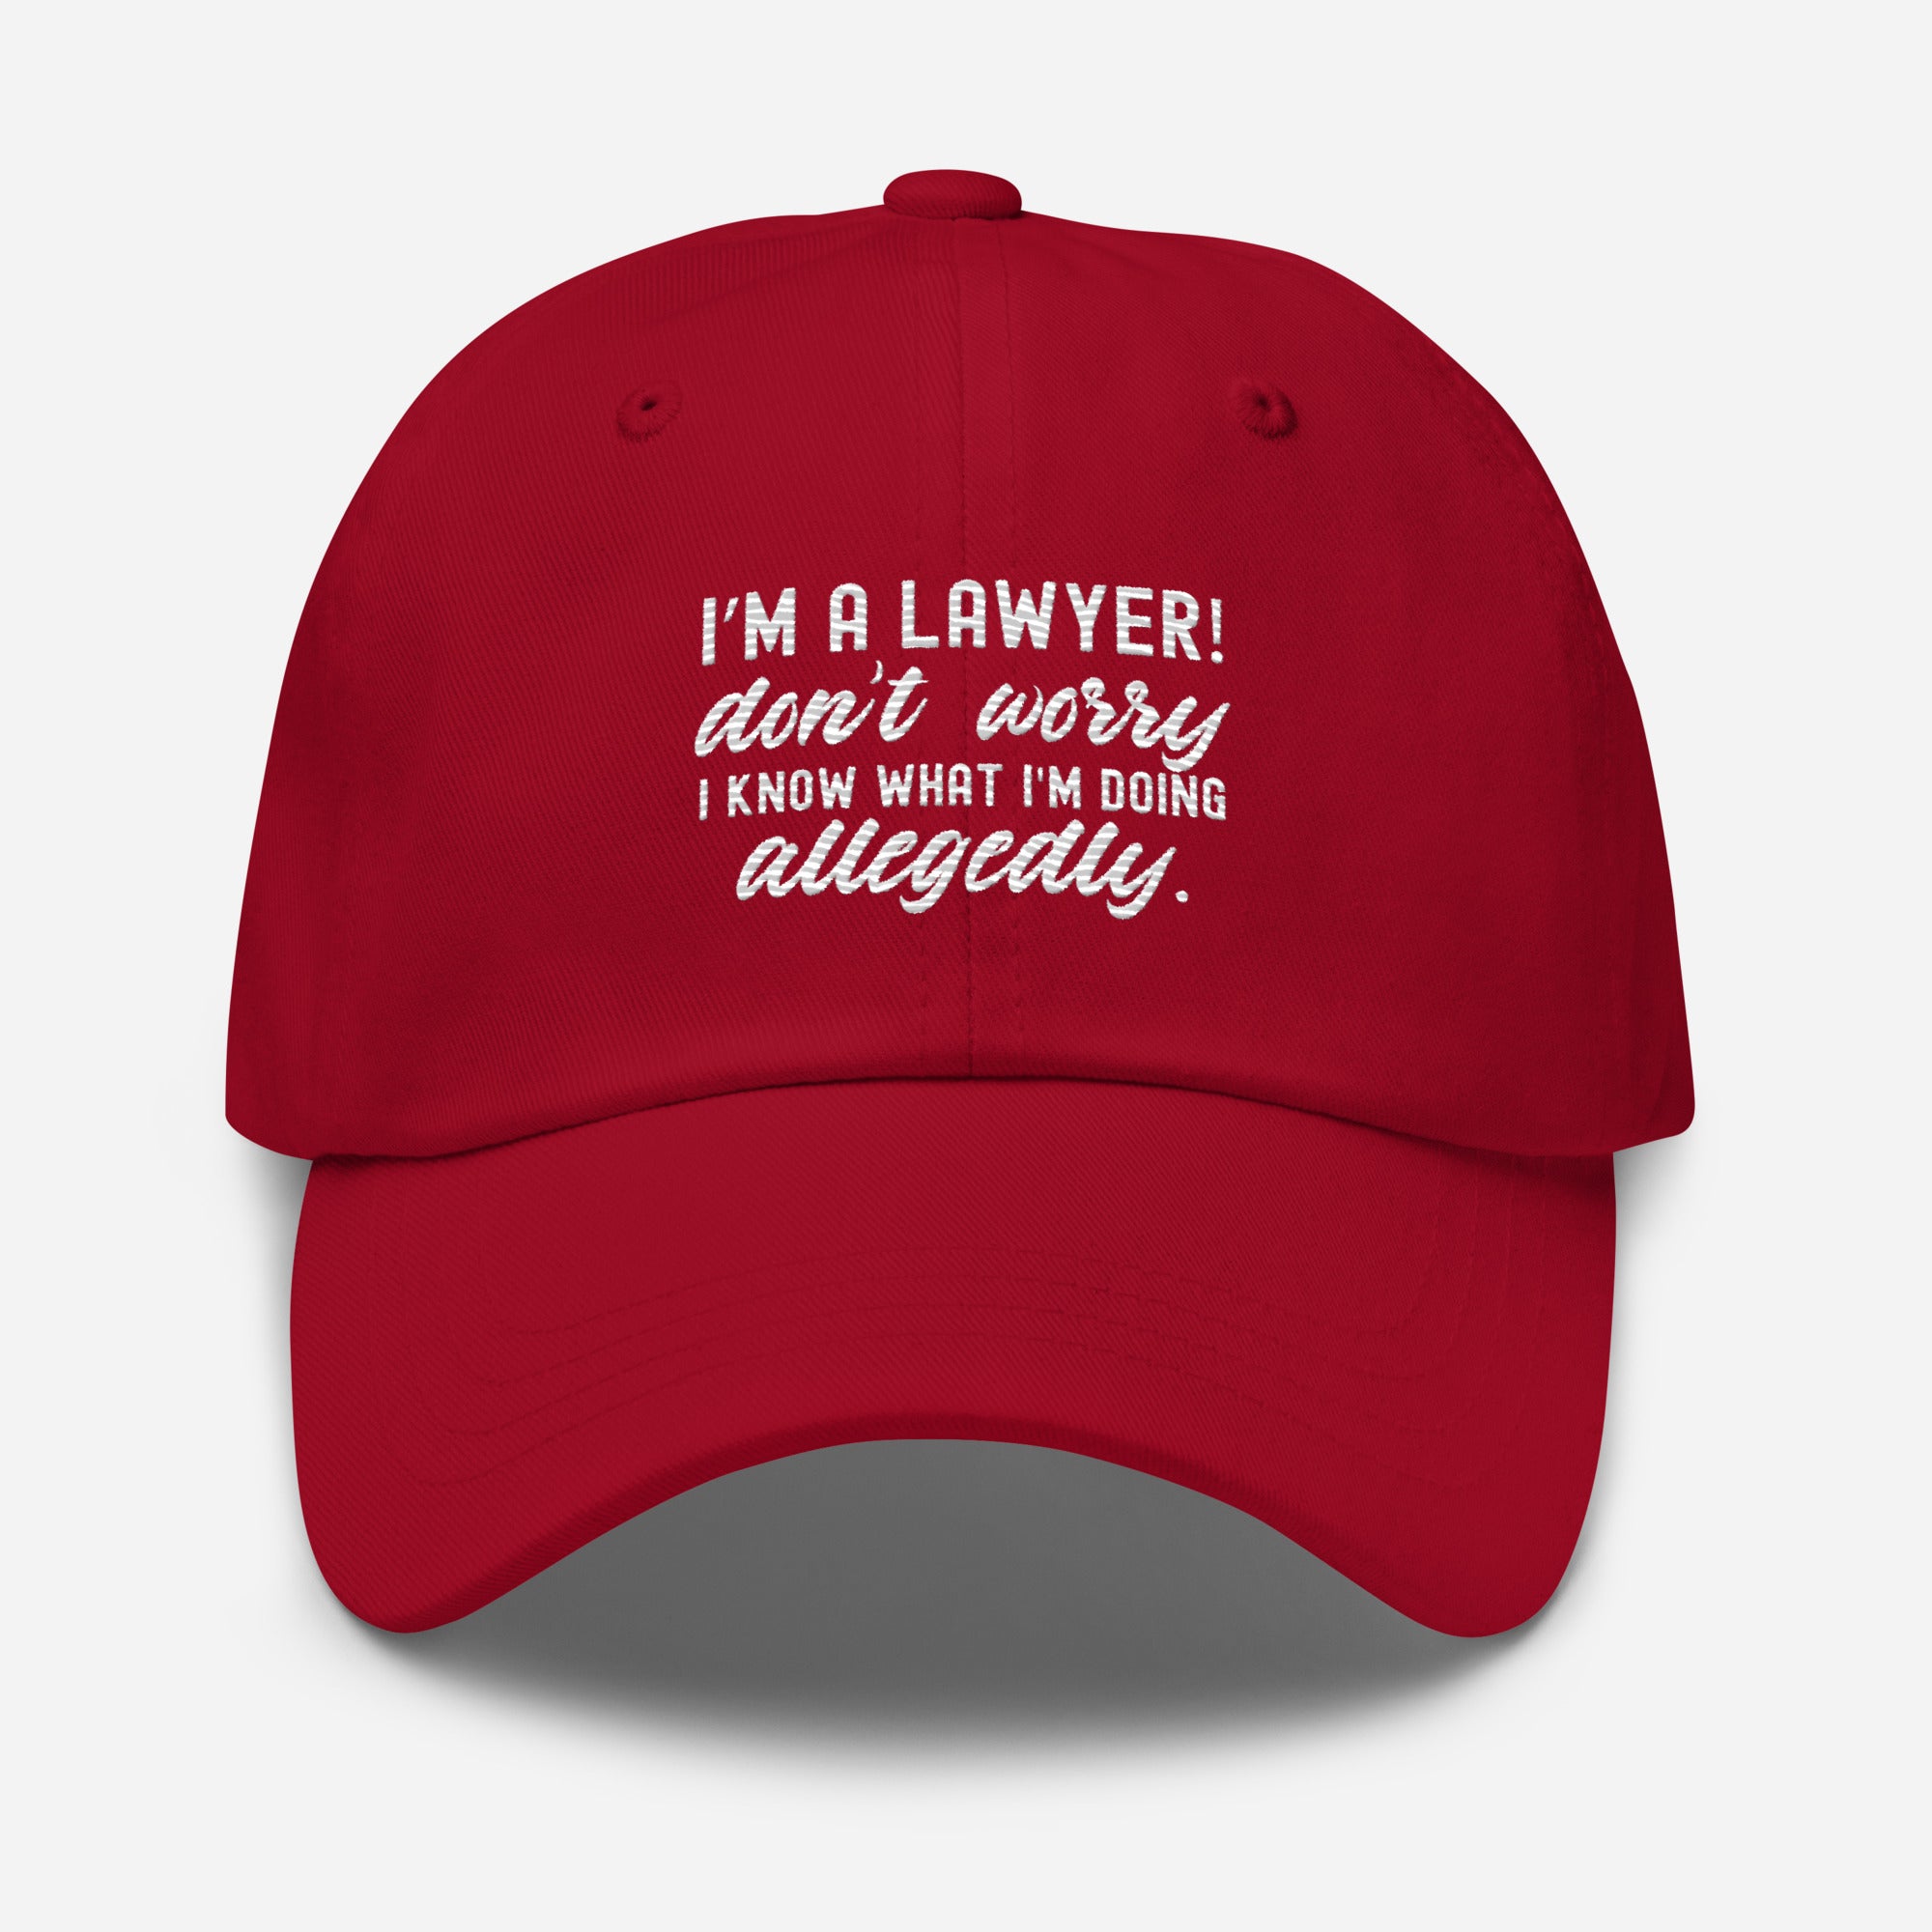 Hat |  I’m a lawyer don’t worry I know what I'm doing (allegedly)